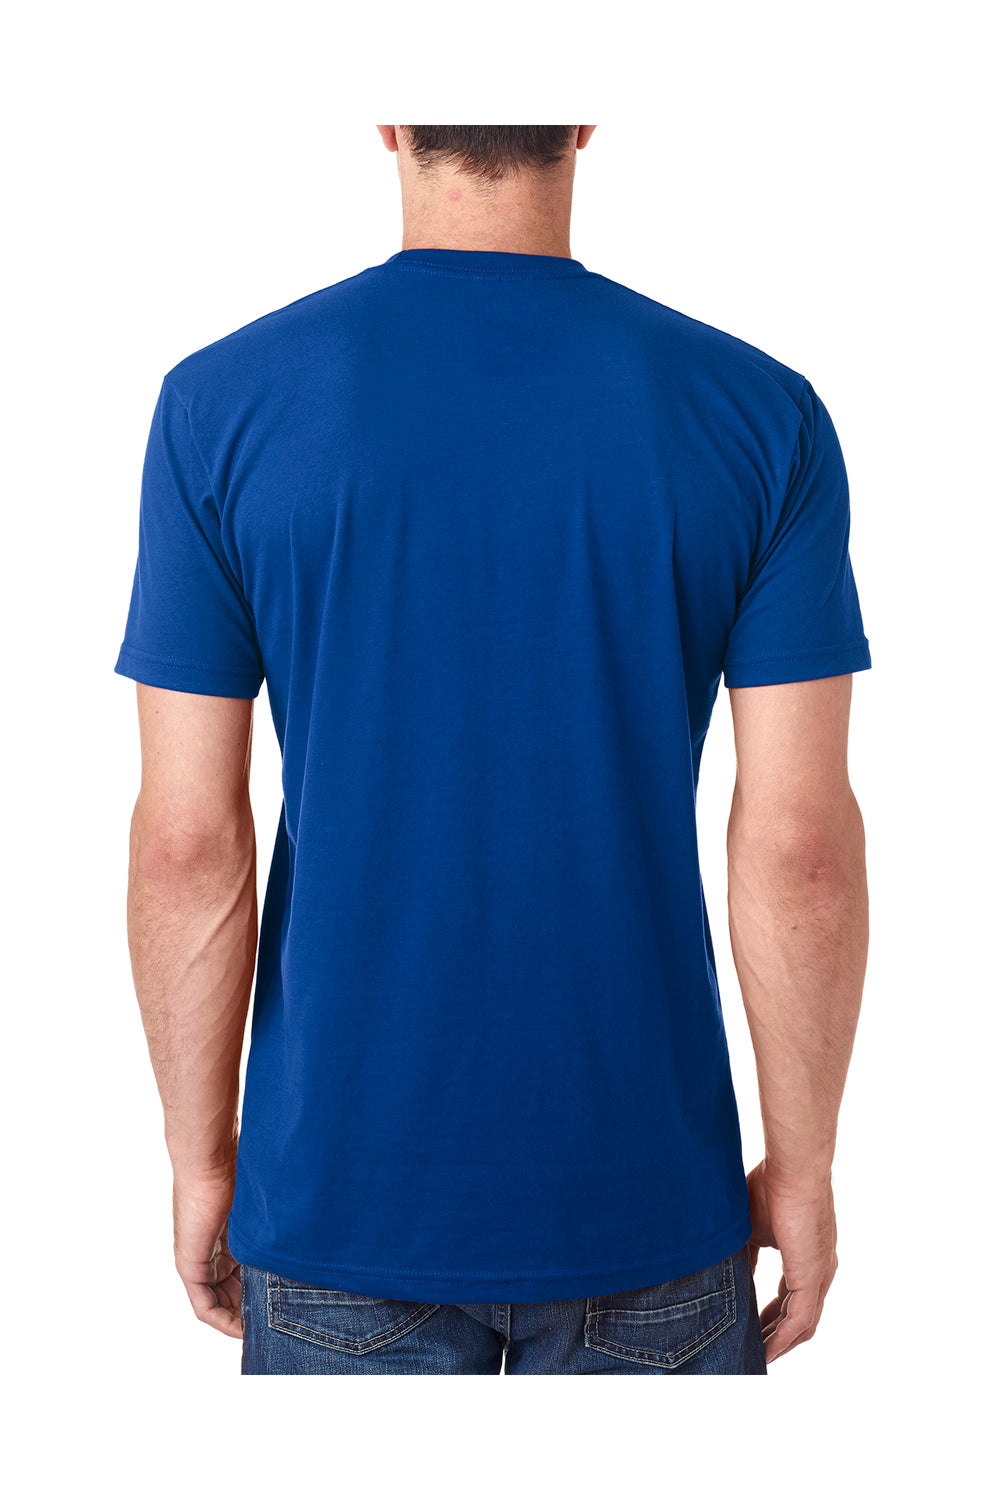 Next Level 6410 Mens Sueded Jersey Short Sleeve Crewneck T-Shirt Royal Blue Back